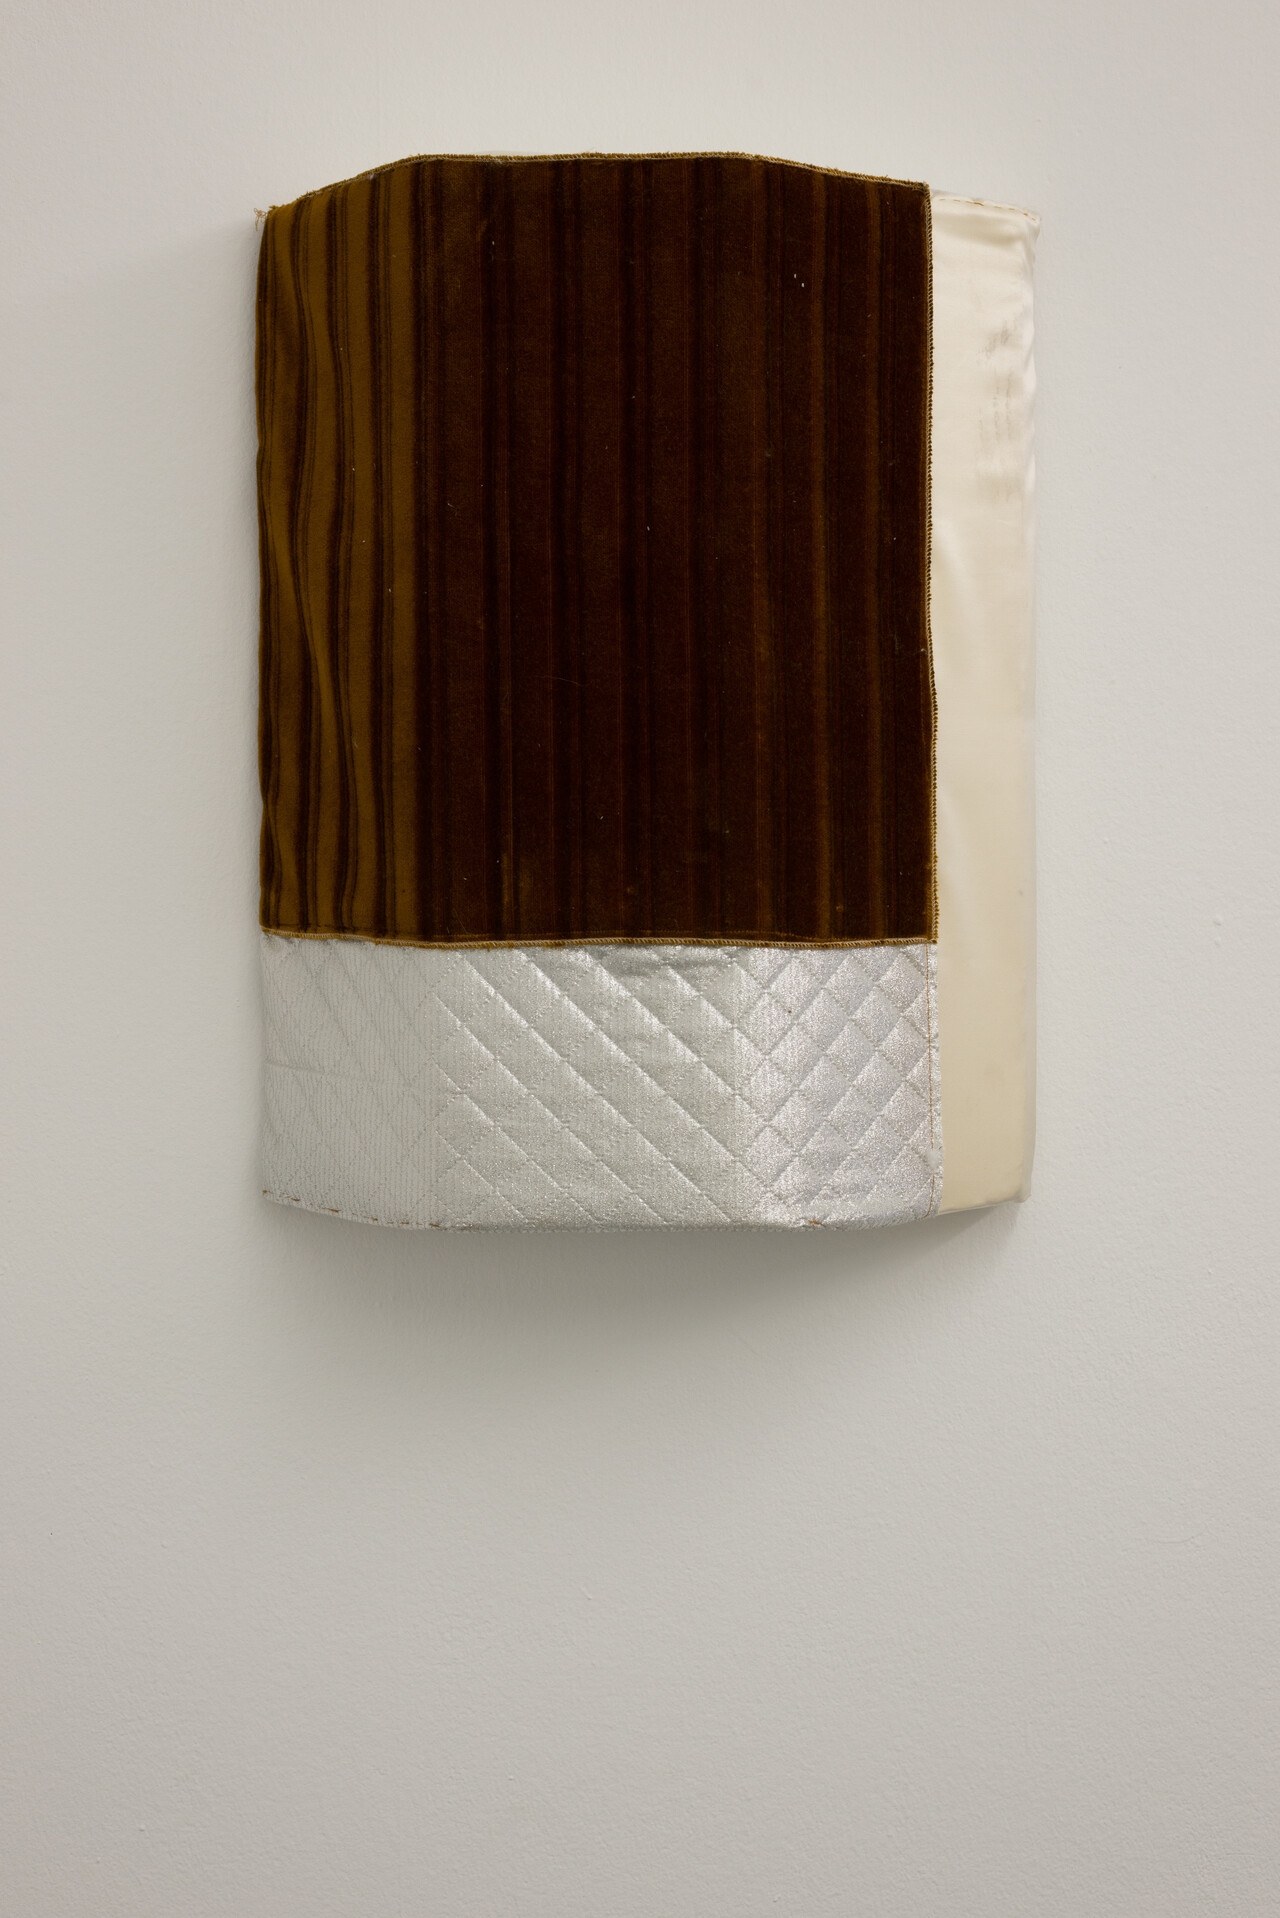 Medizinschrank, 90×50×35cm, 2018, Fabric, Polystyrene